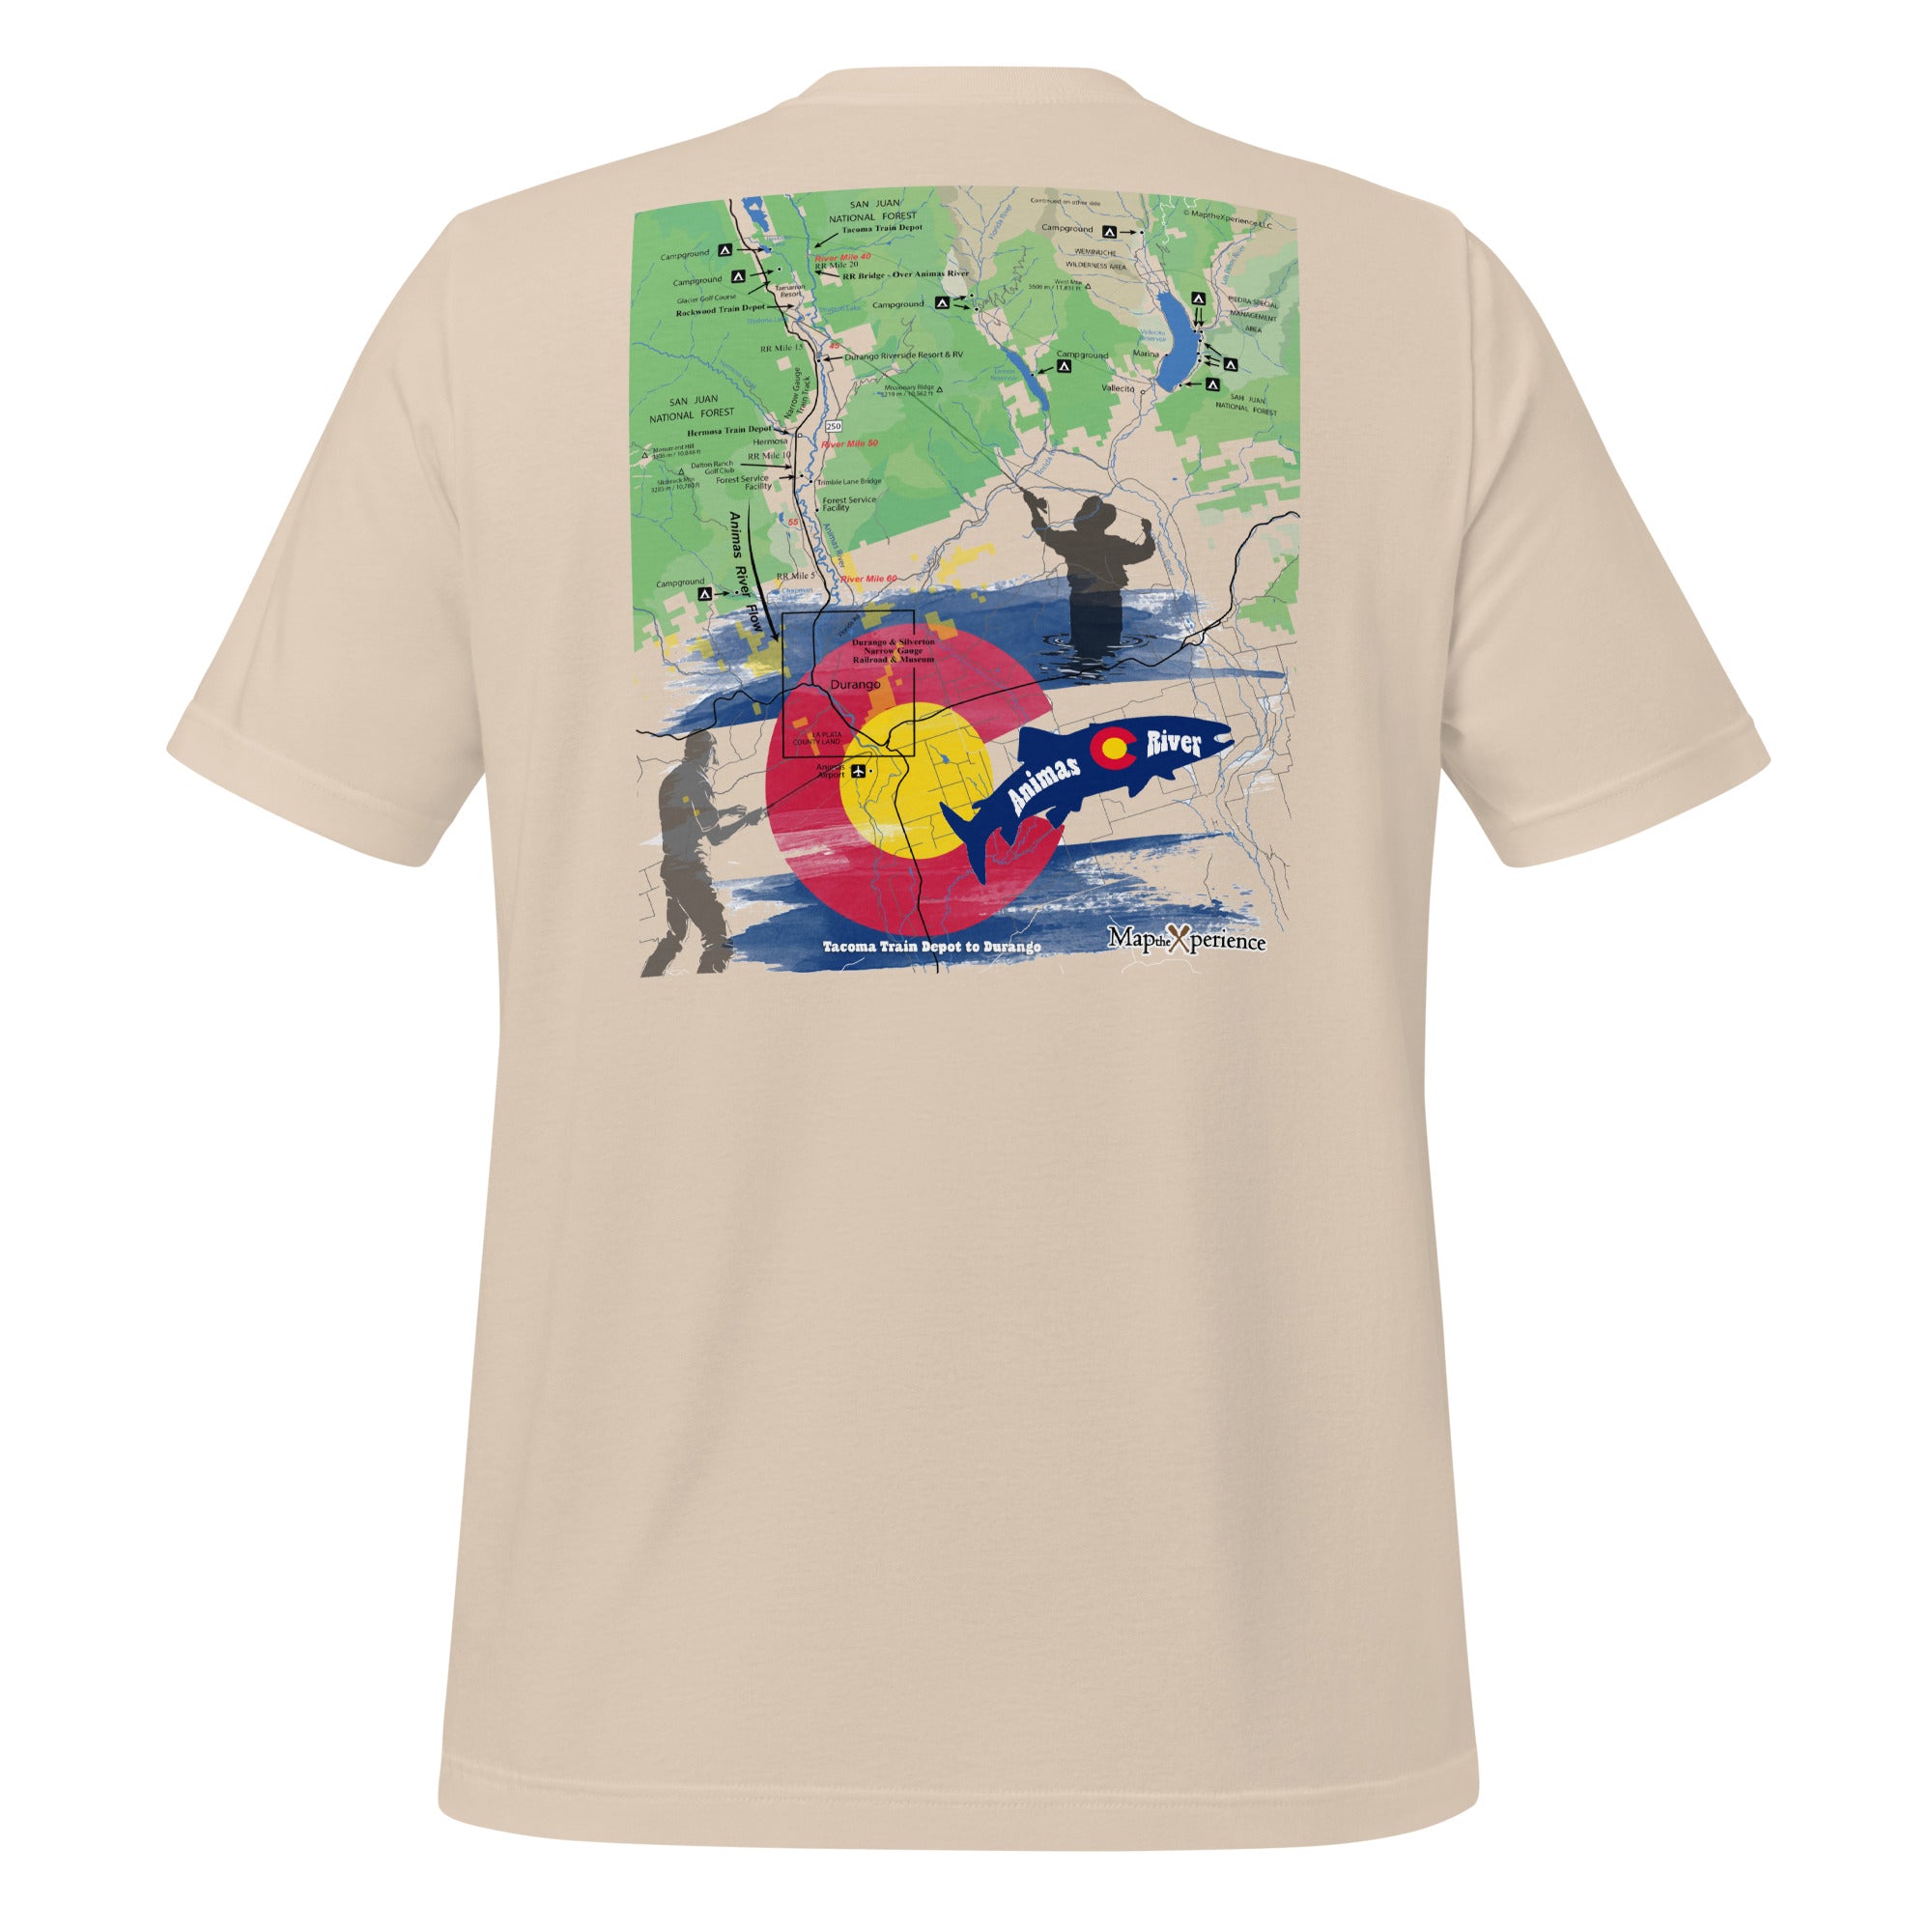 Animas River Lower, Colorado Performance t-shirt